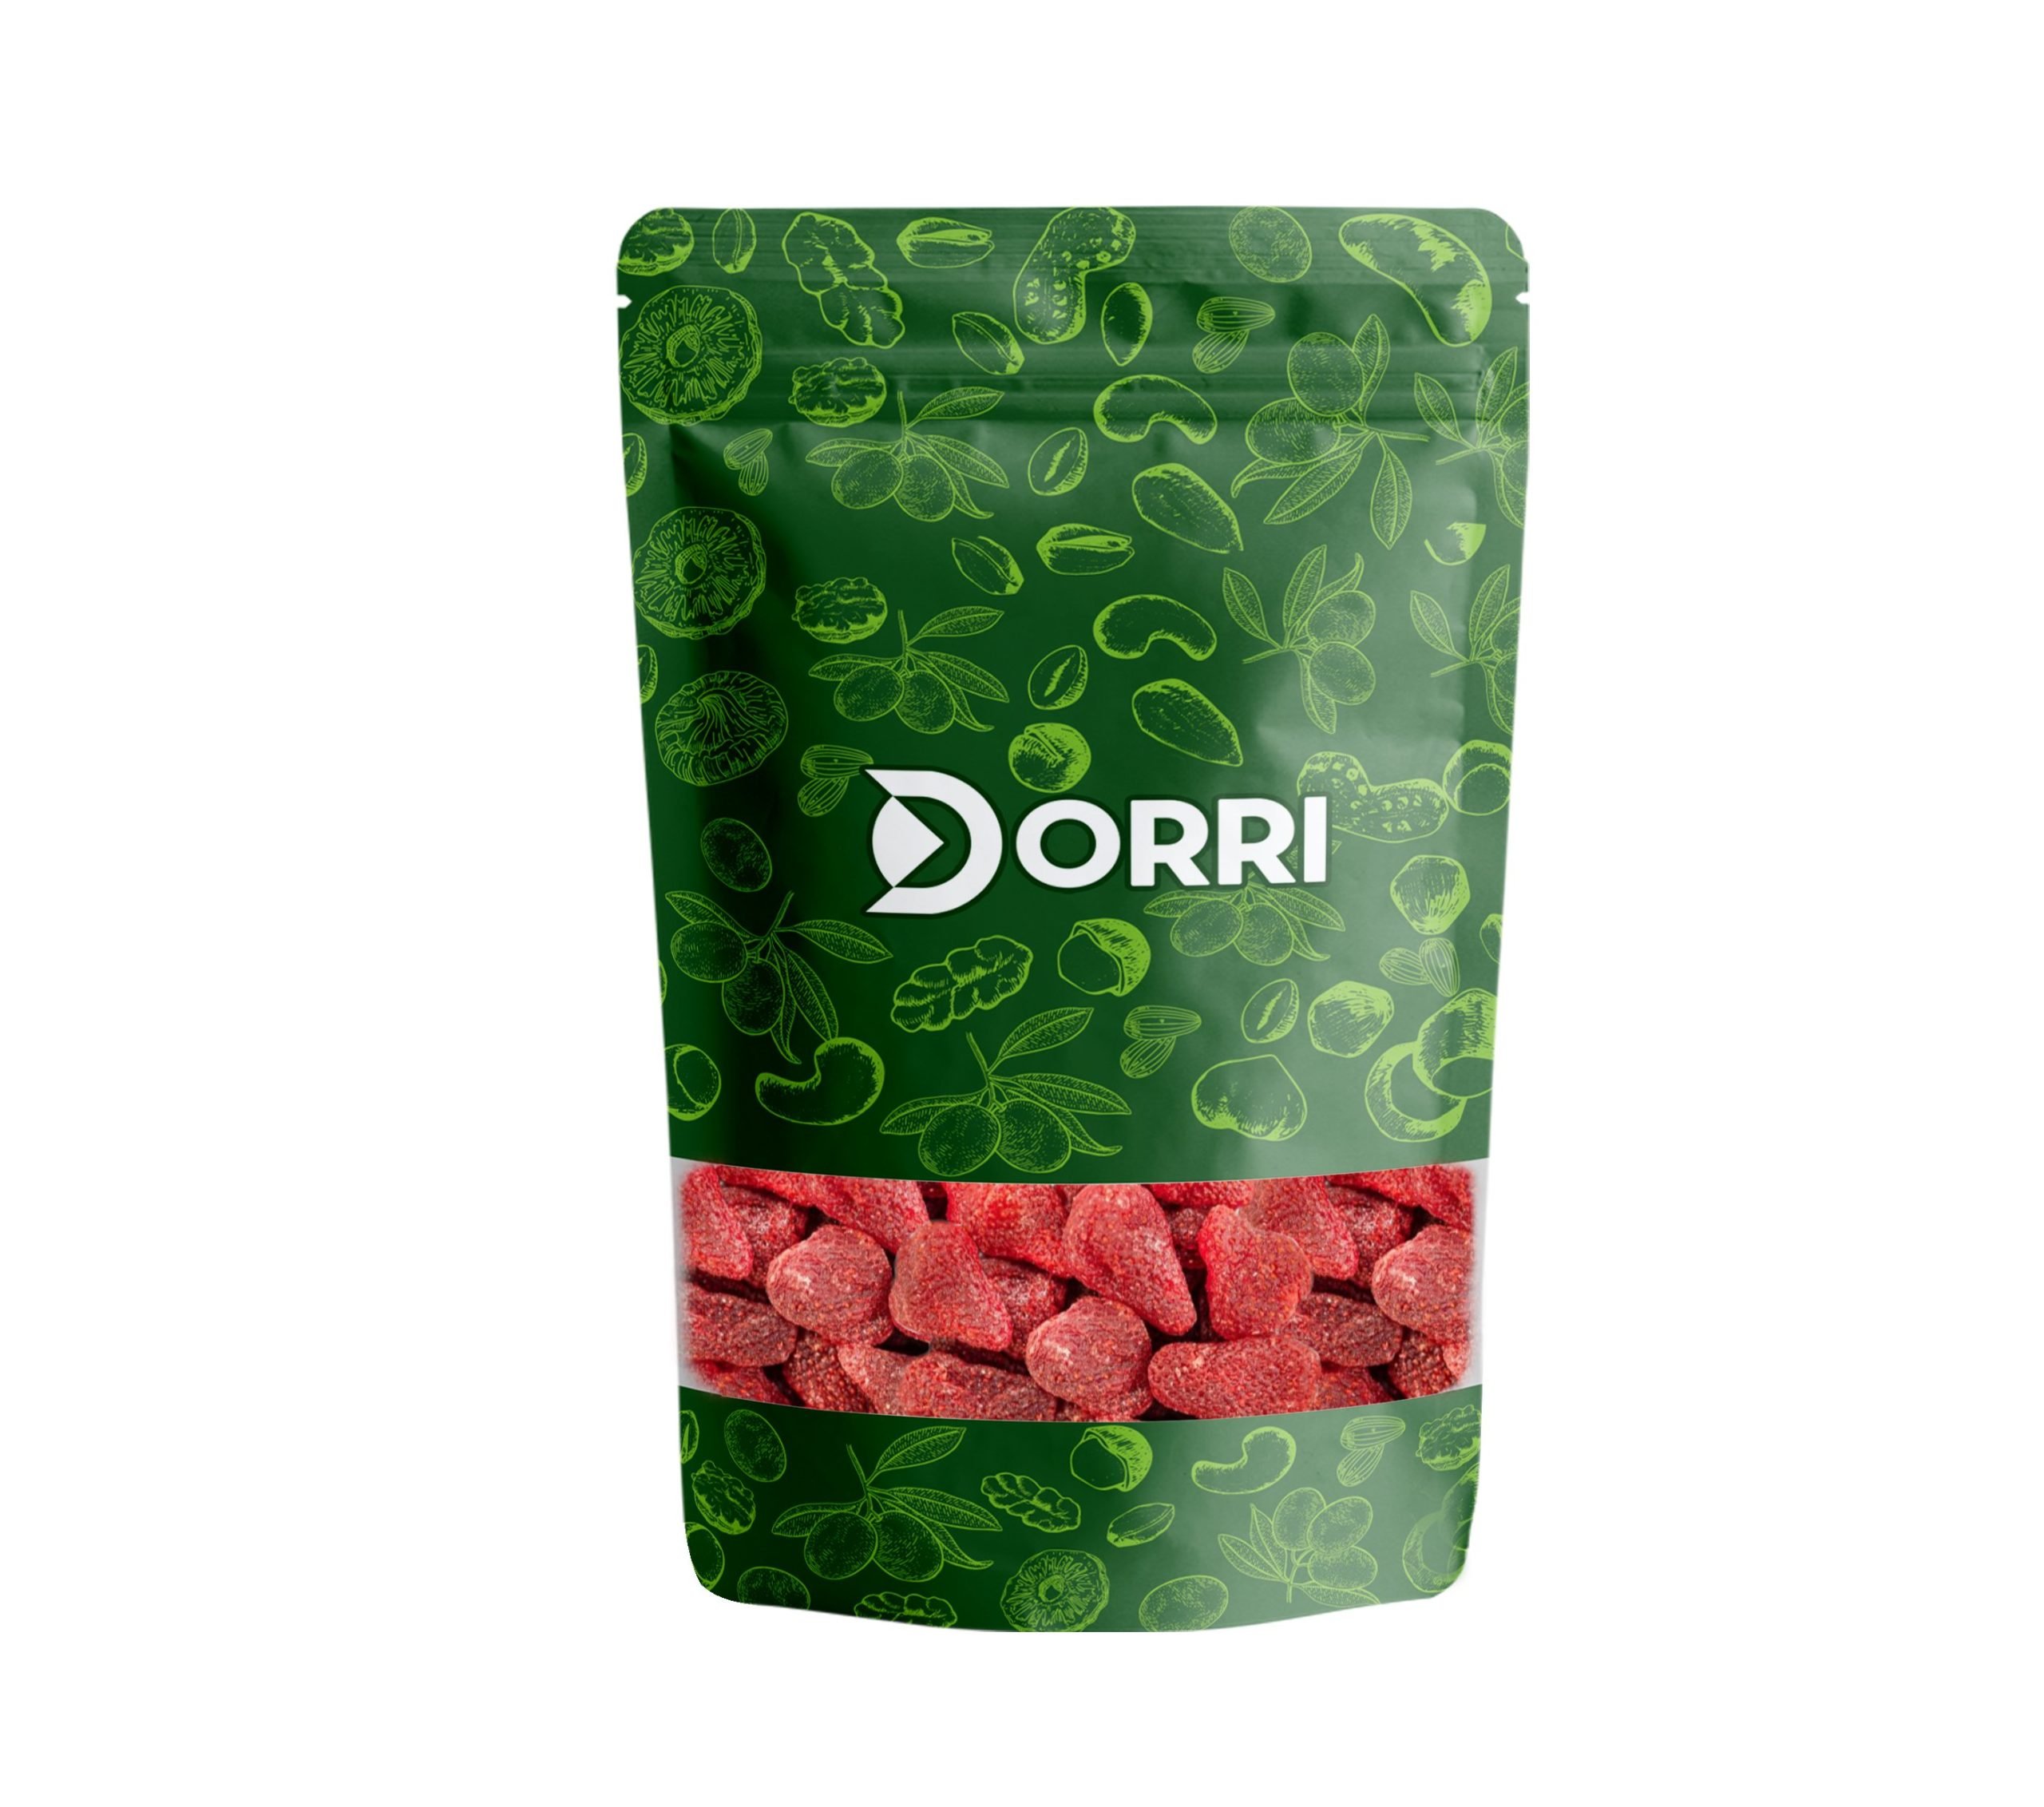 Dorri - Dried Strawberries